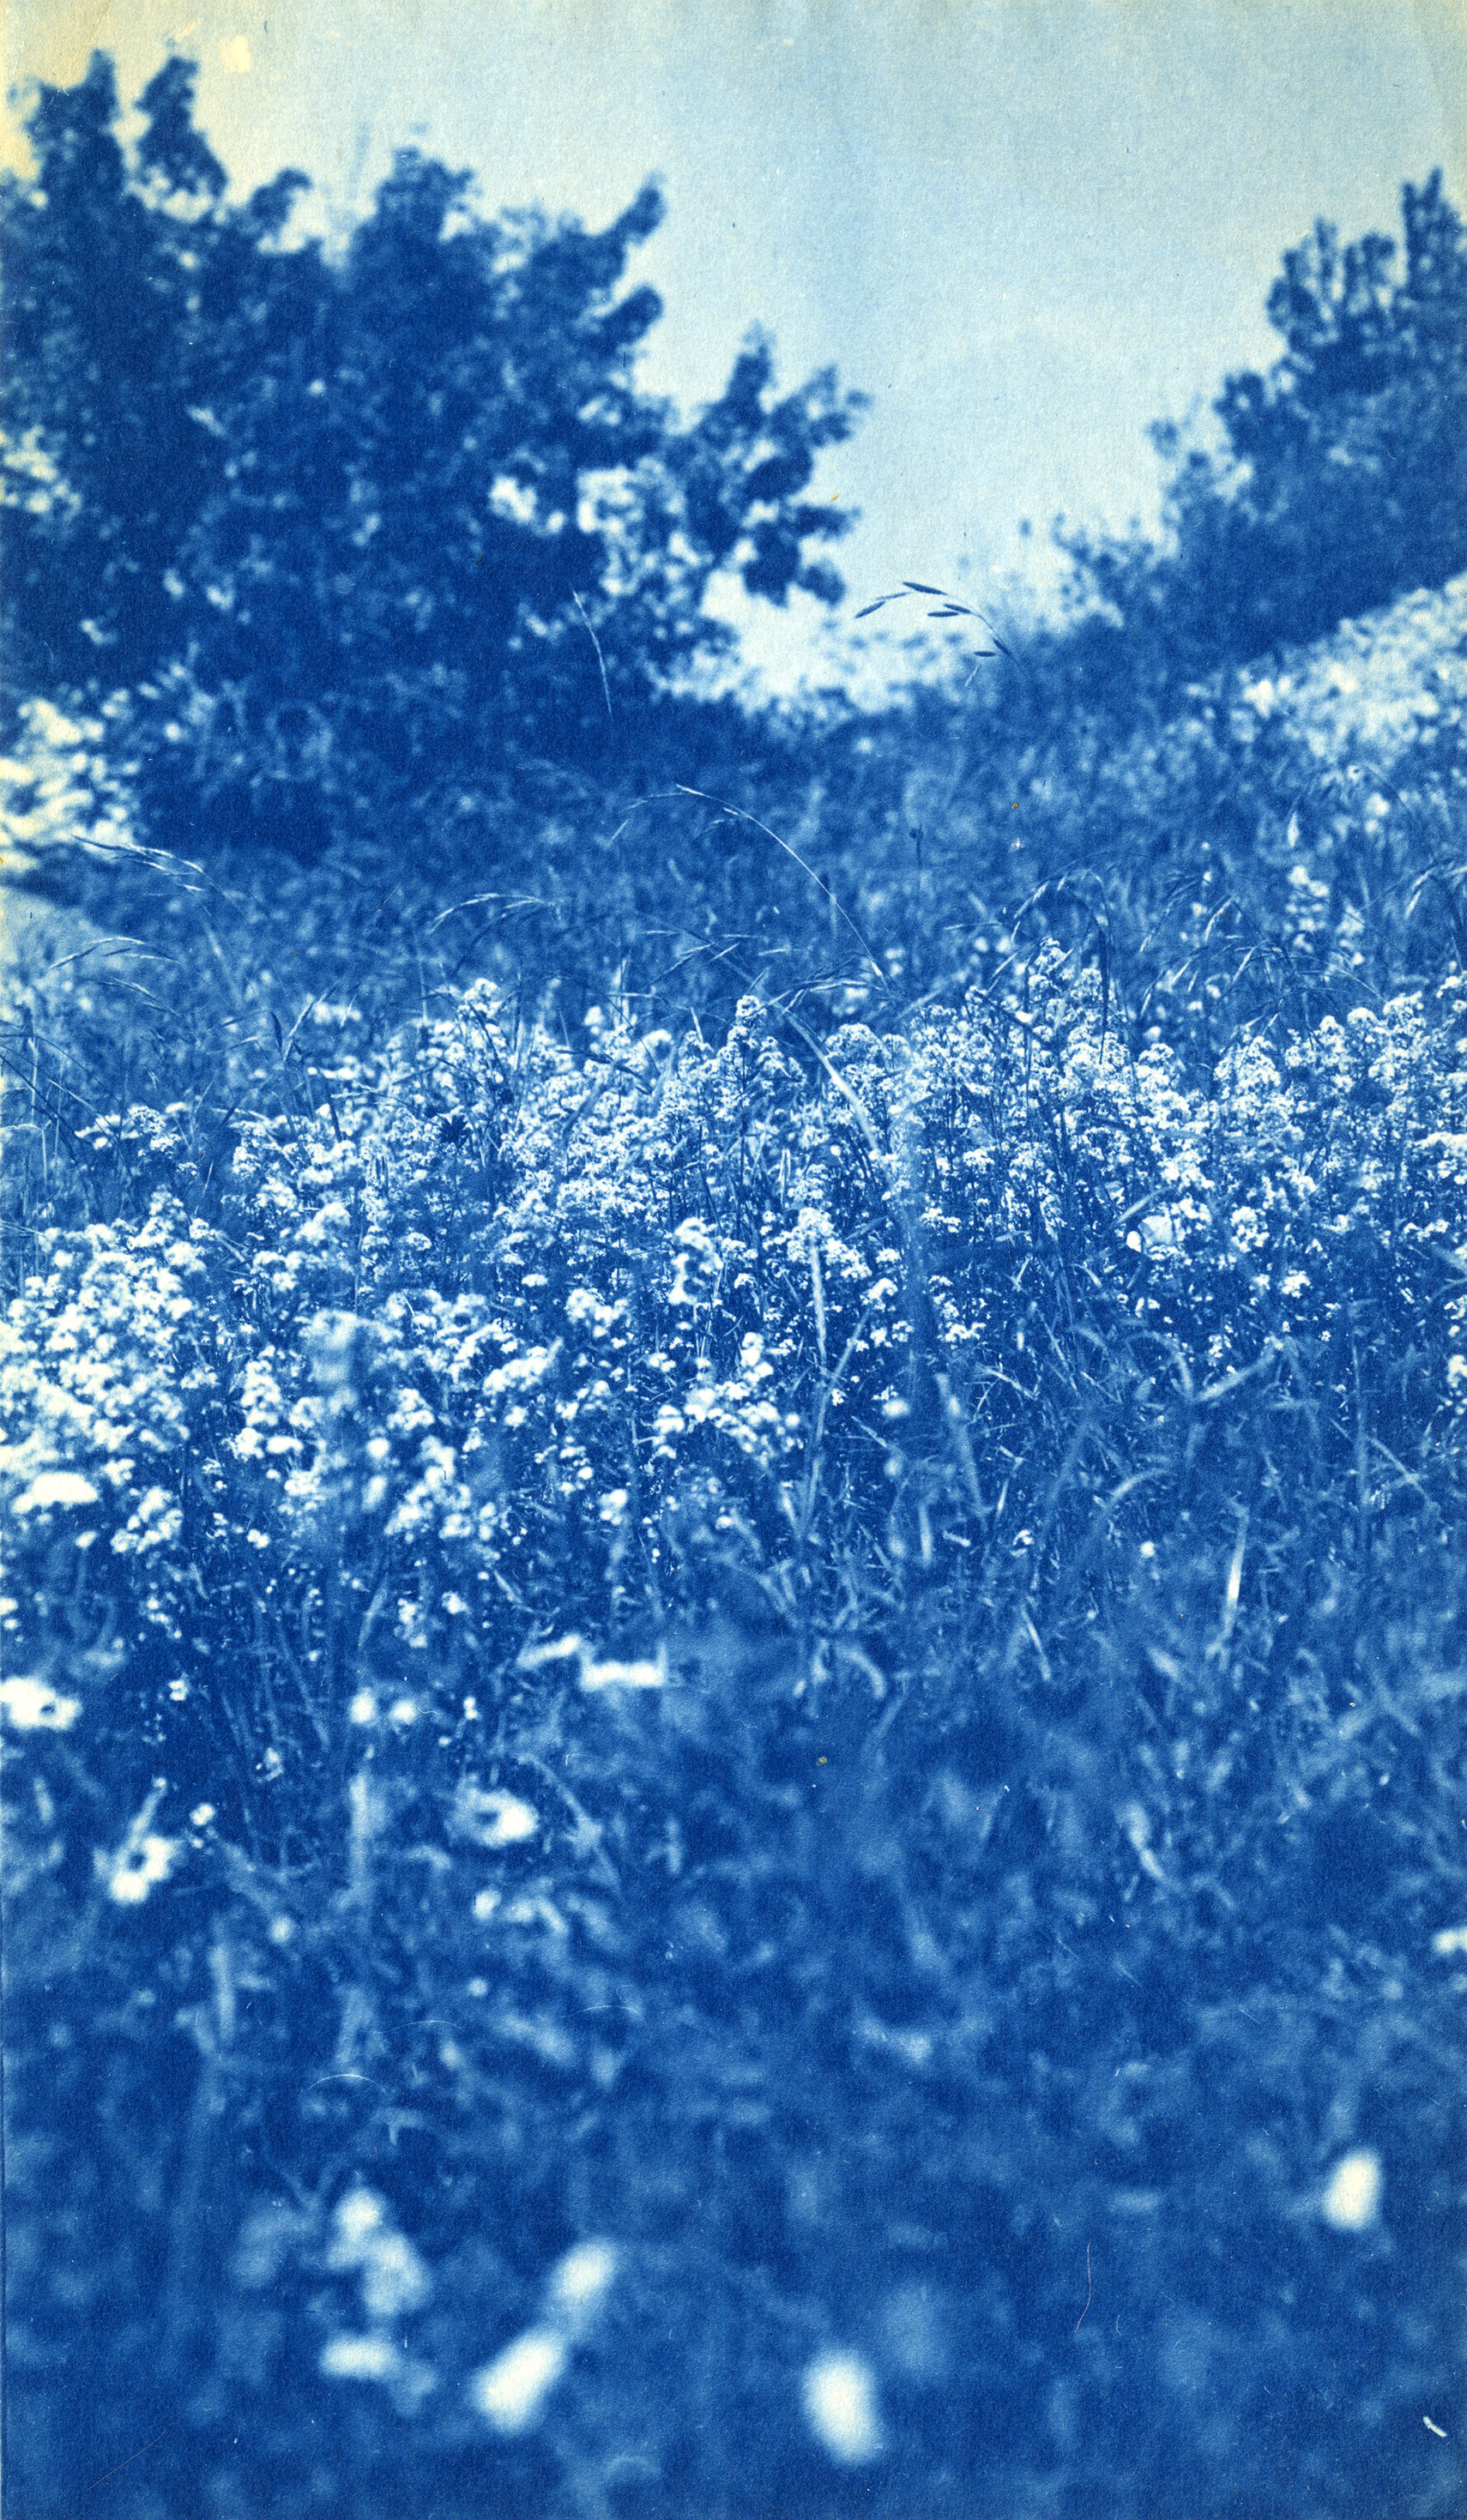 Cyanotype of wildflowers